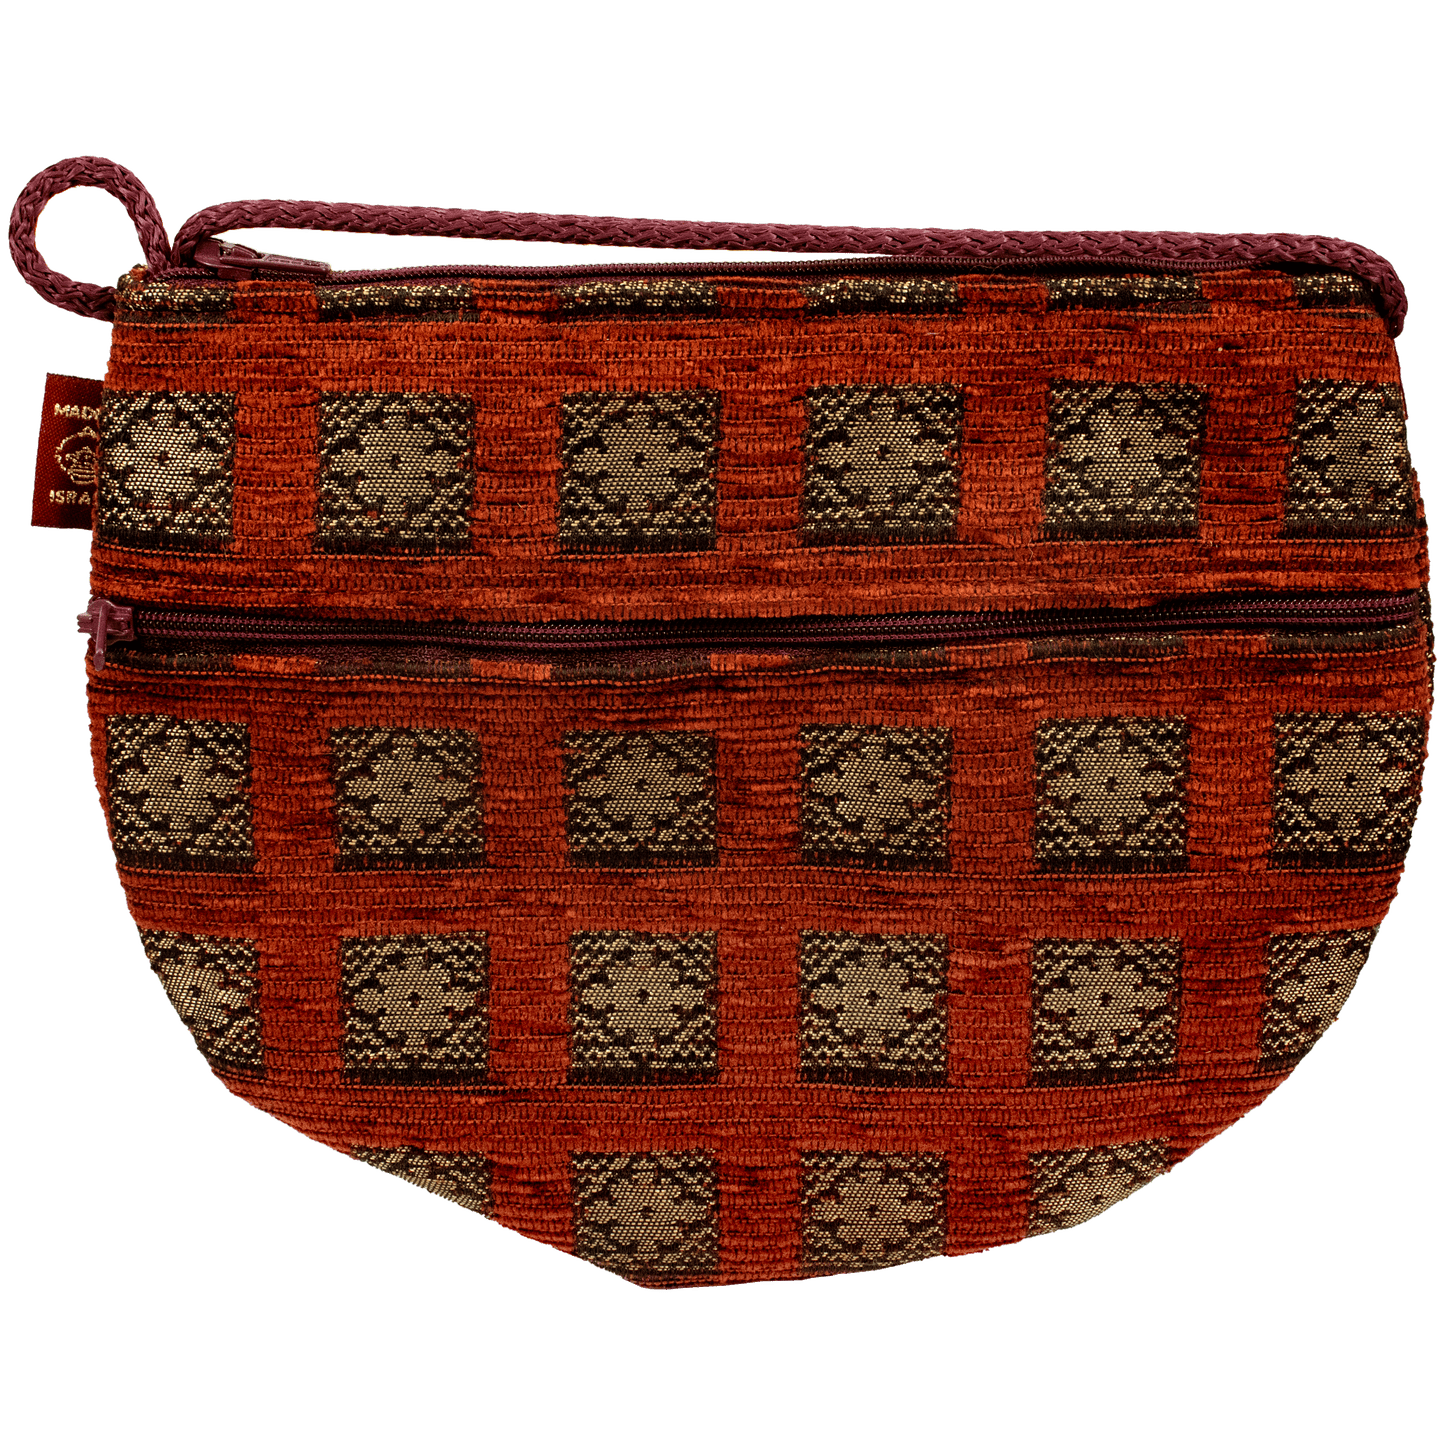 Deep Terracotta Half Moon crossbody purse with golden floral tile pattern